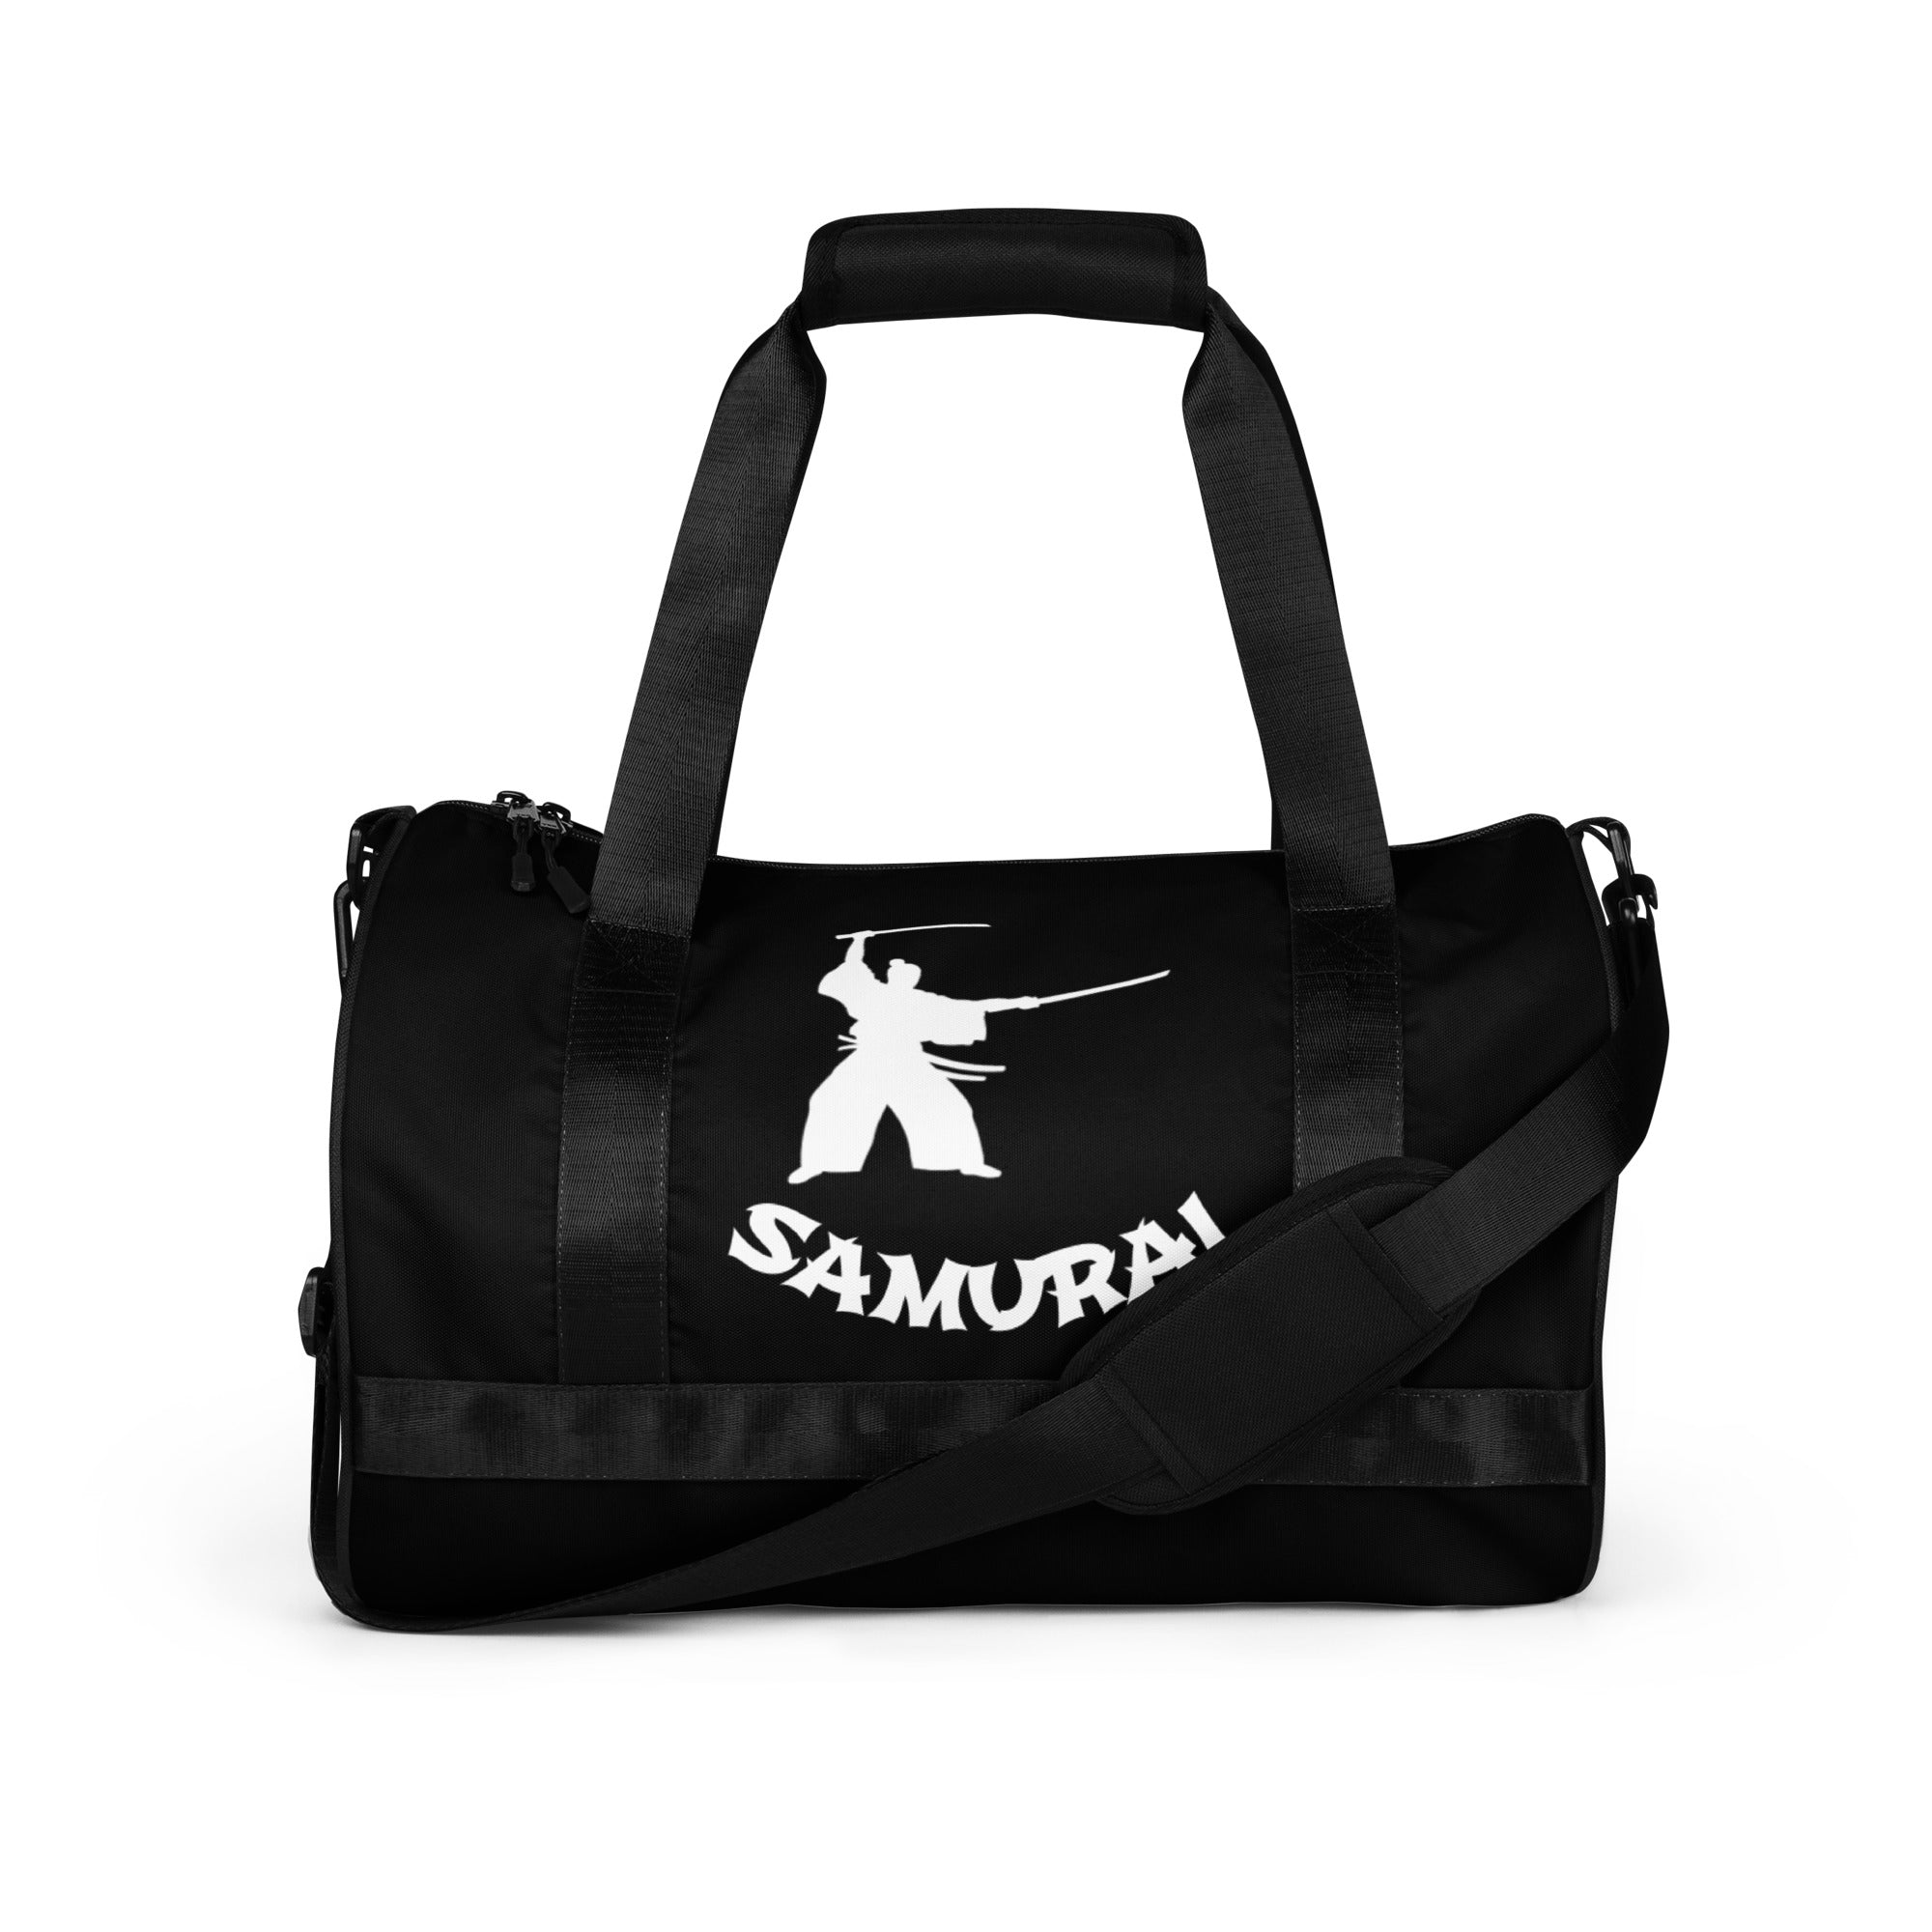 Samurai Warrior Mask & The Japanese Kanji Duffle Gym Bag - Edge of Life Designs